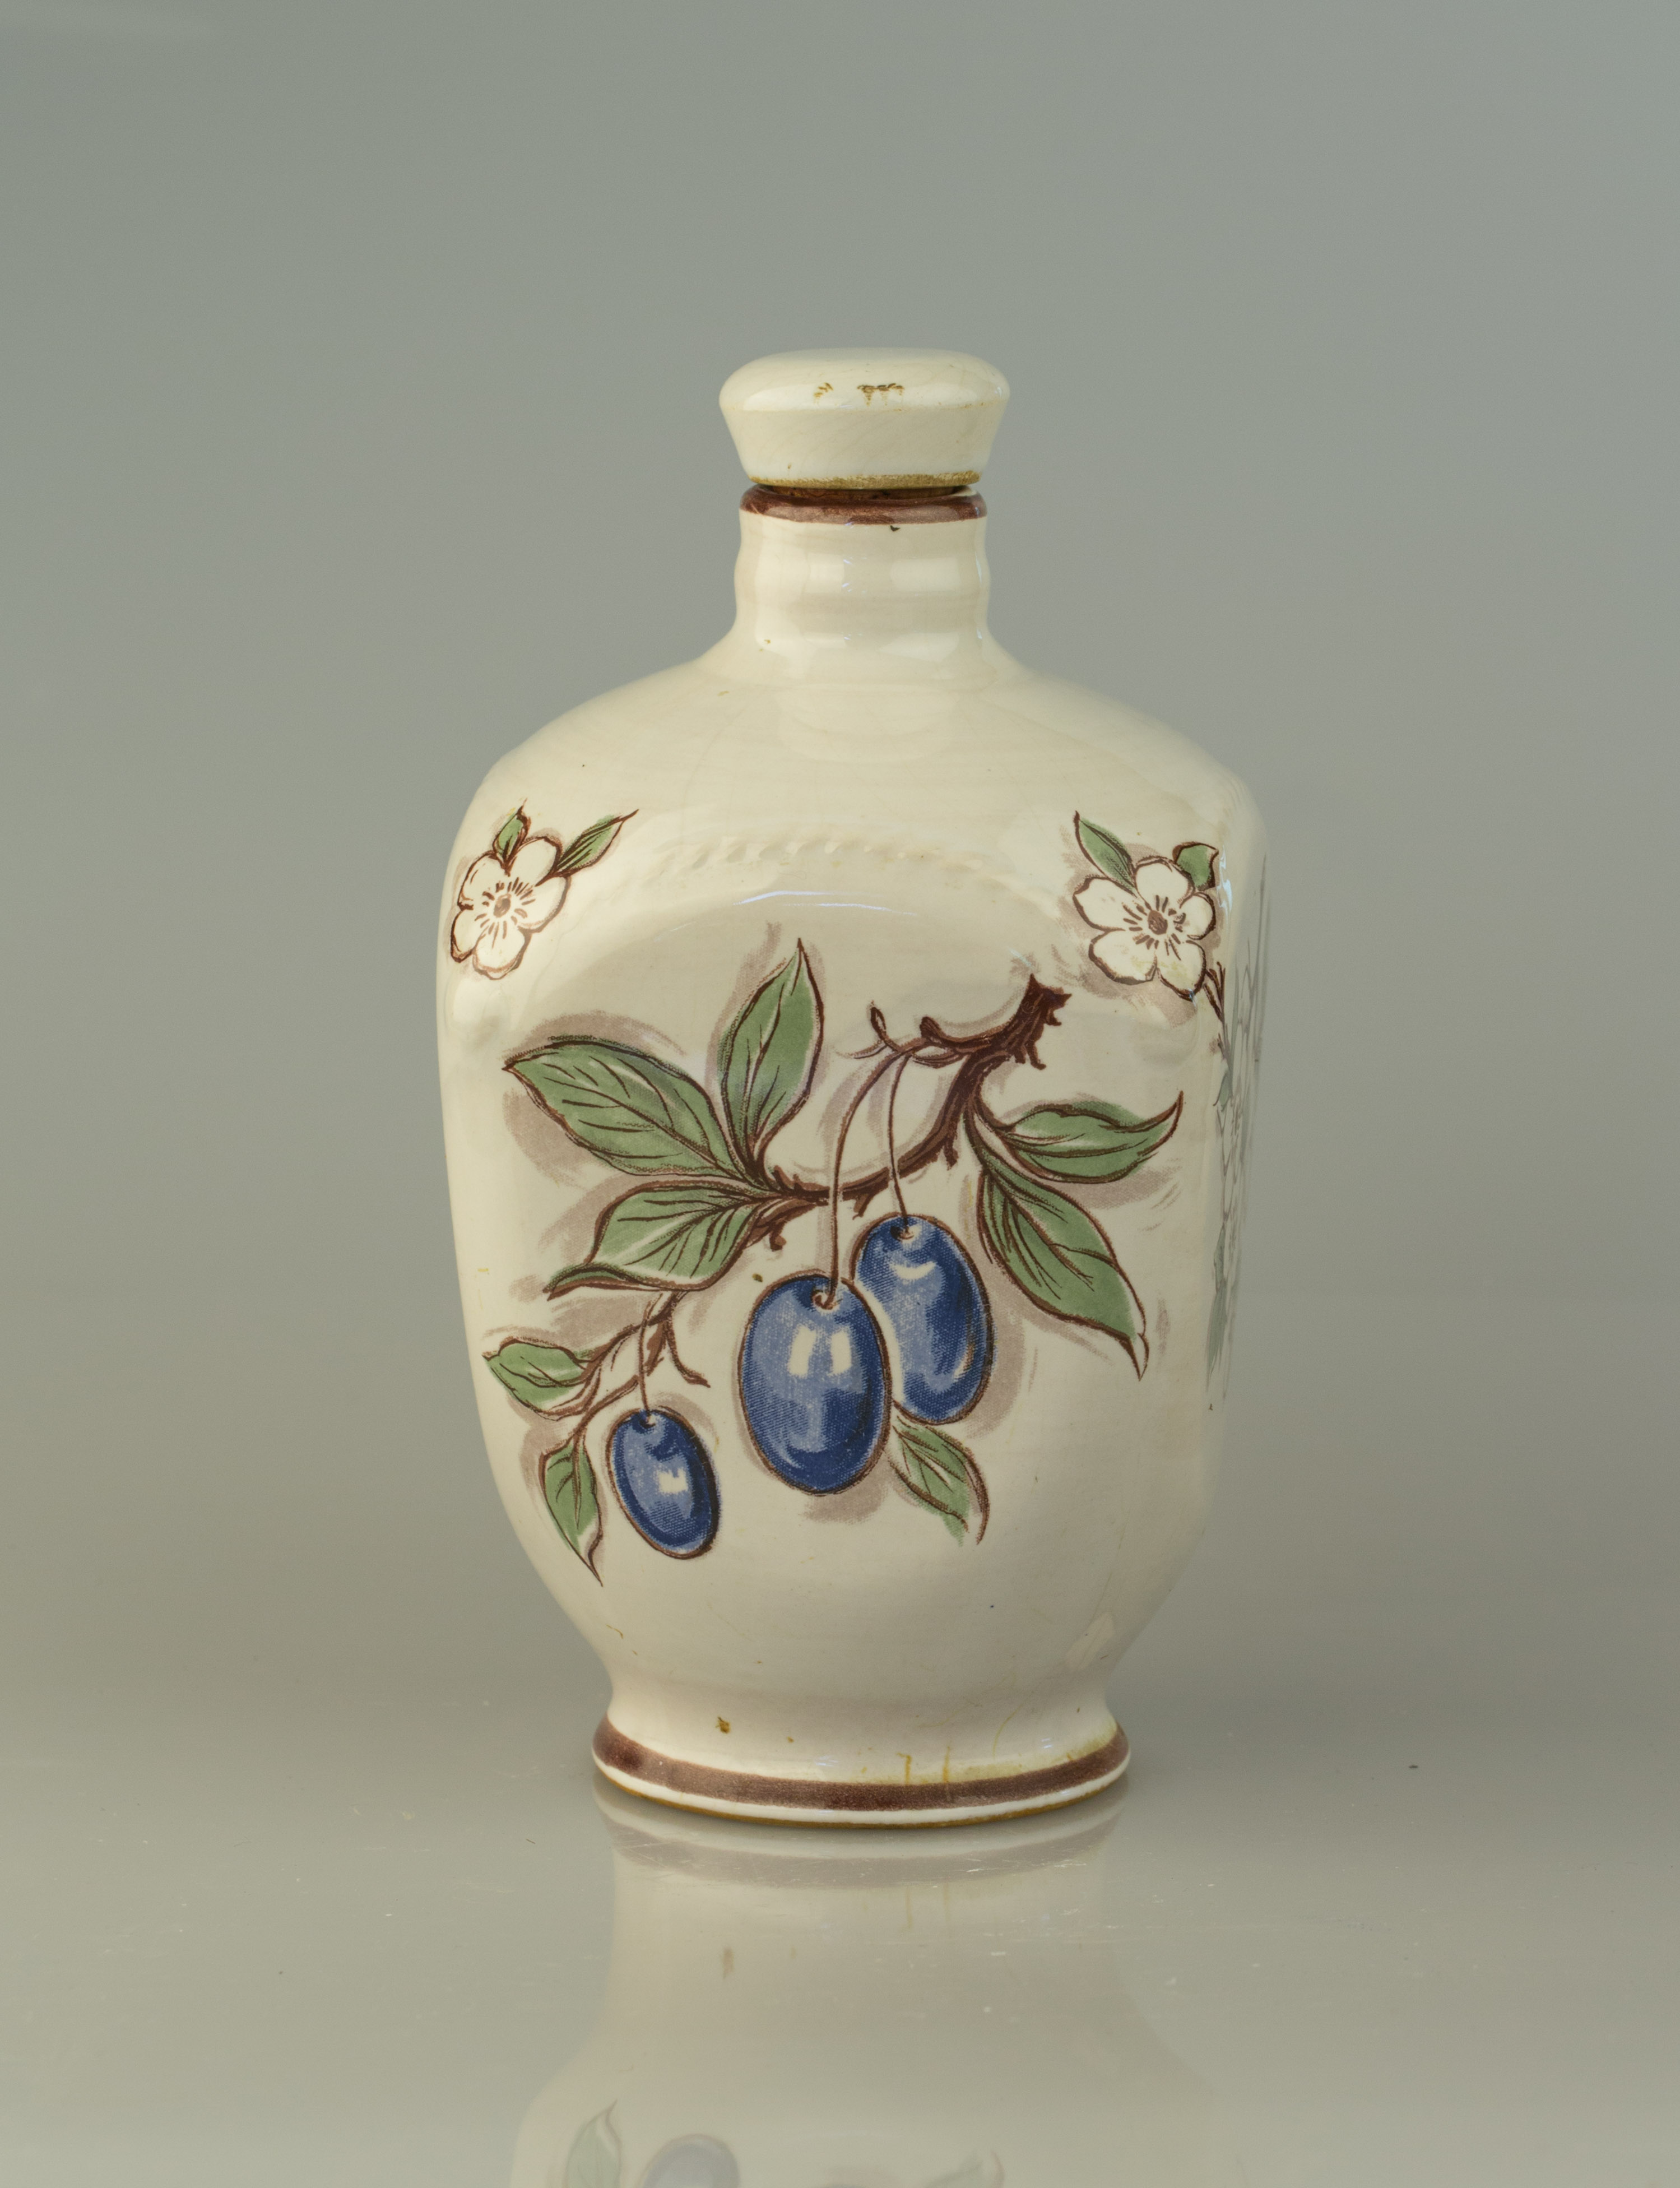 20140707 Radkersburg - Bottles - glass-ceramic (Gombocz collection) - H3496